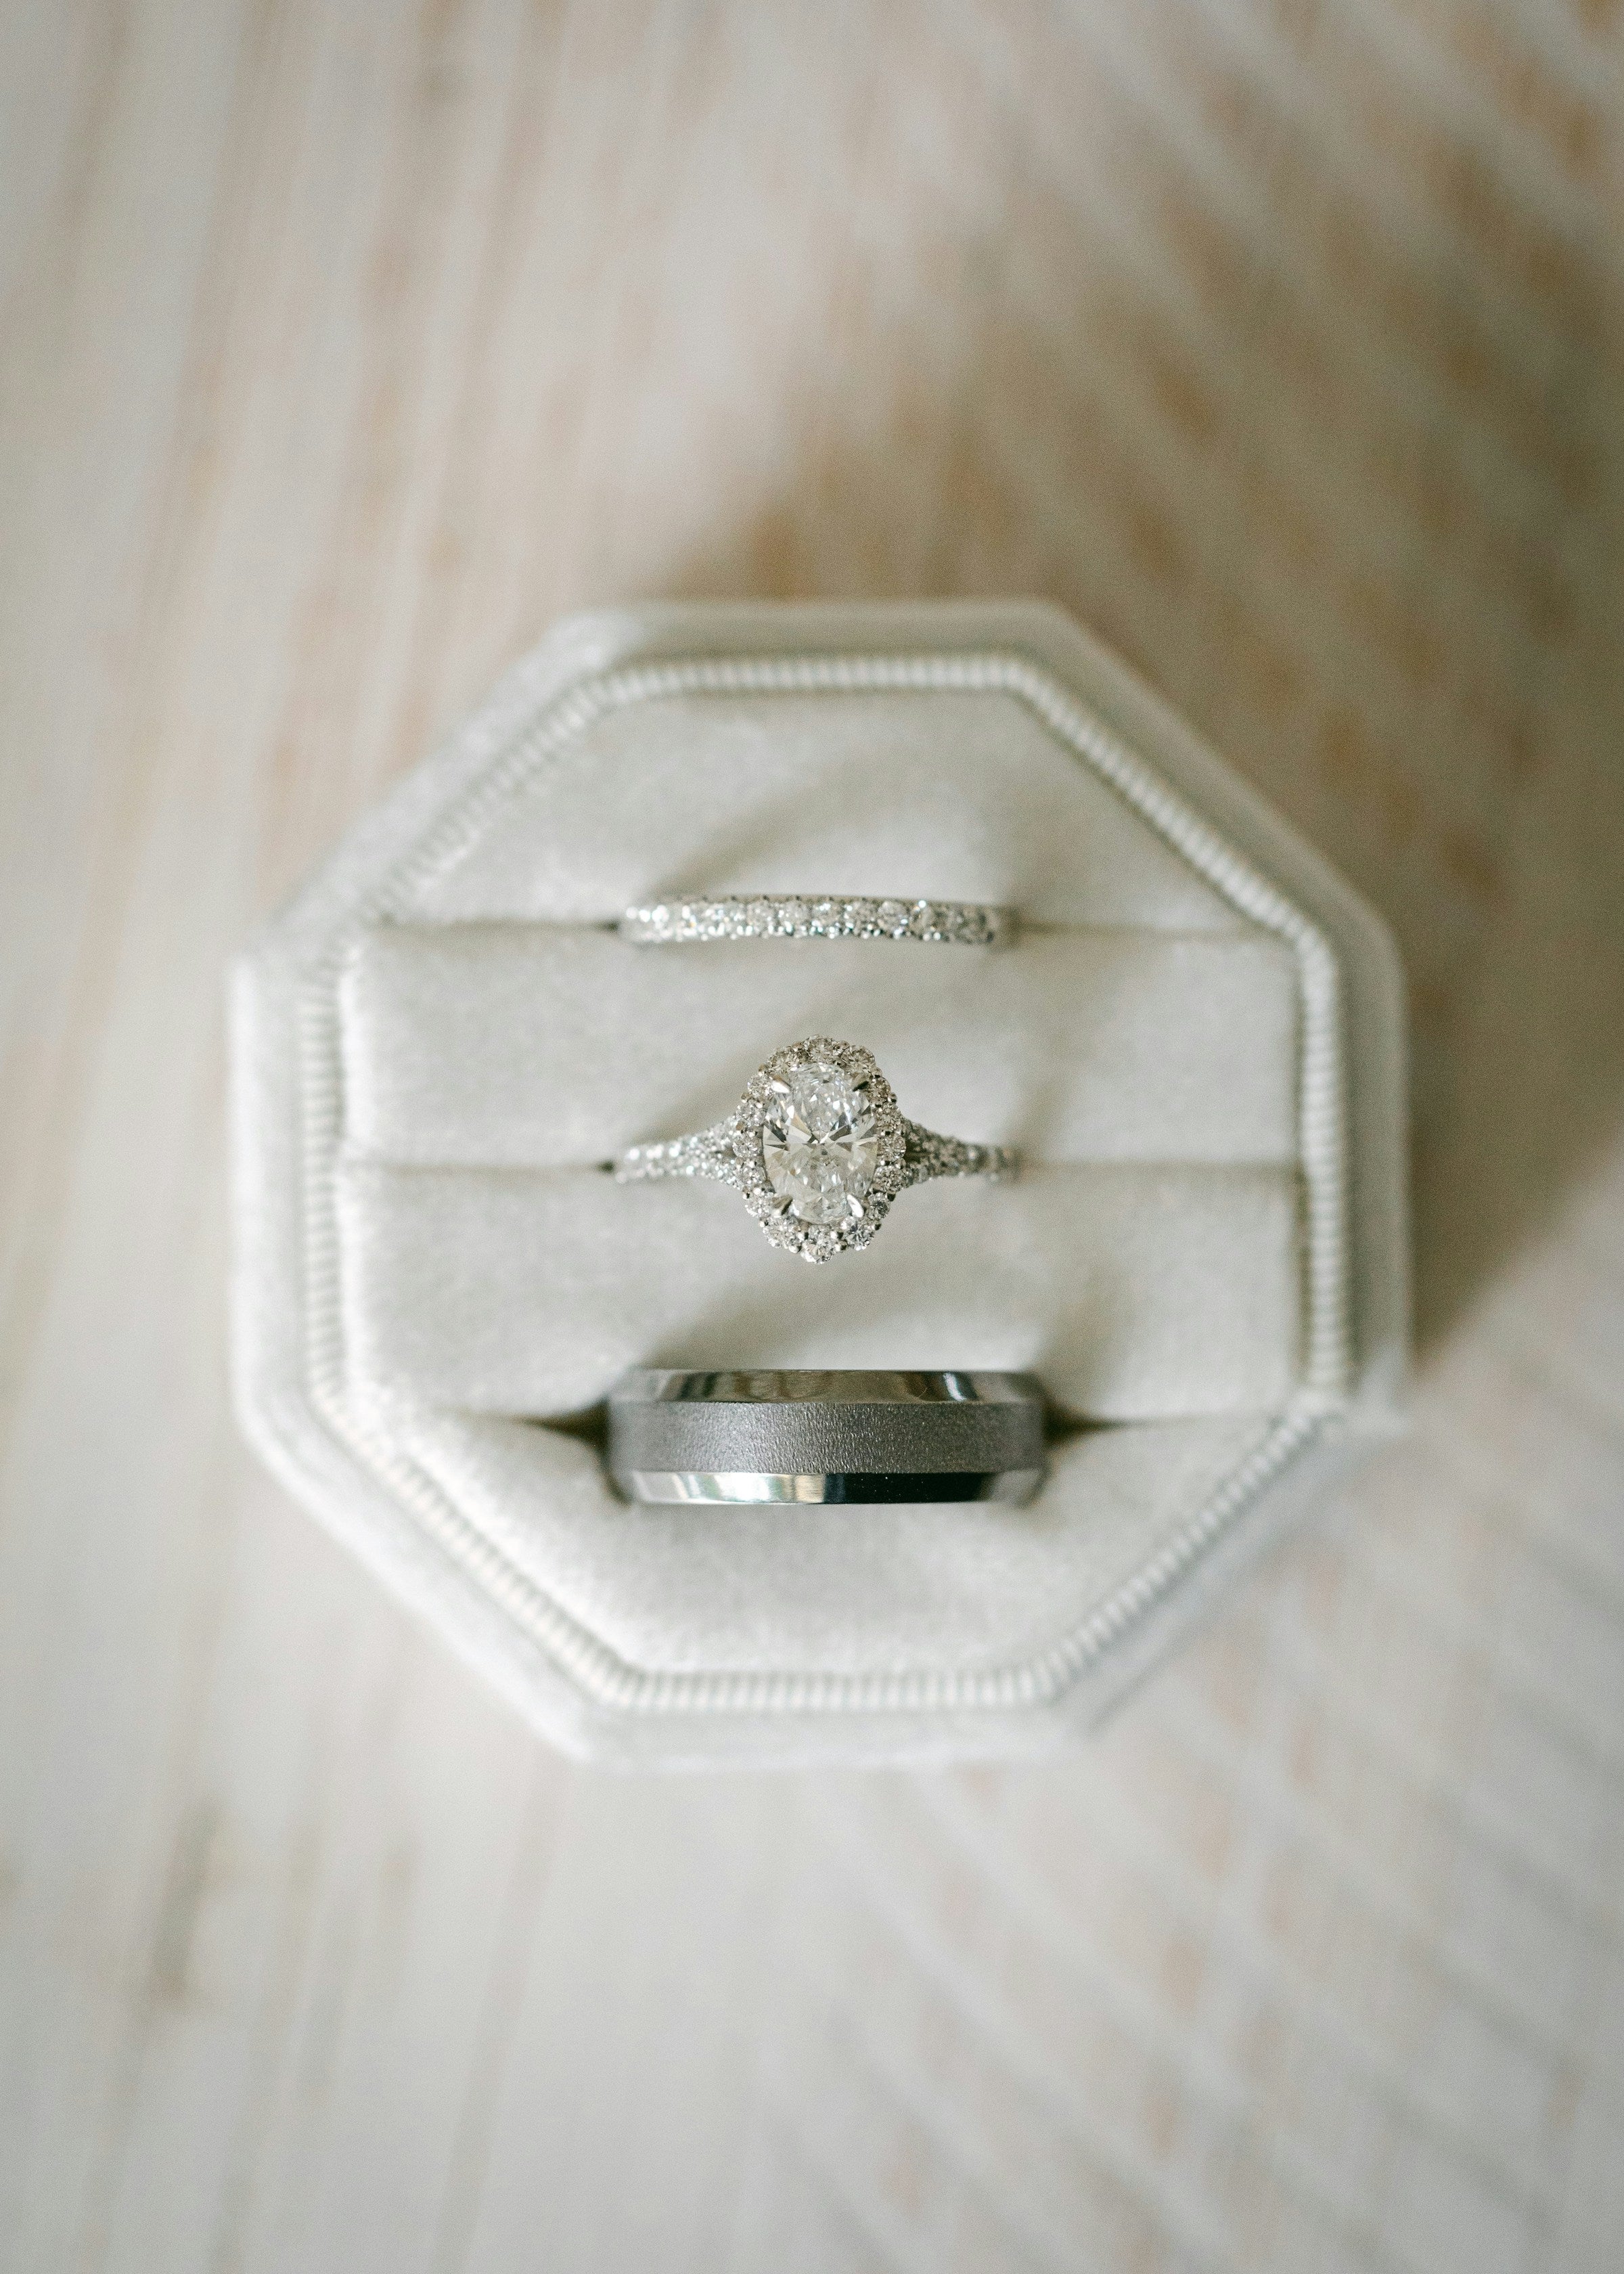 3 Carat Lab Grown Oval Diamond Engagement Ring